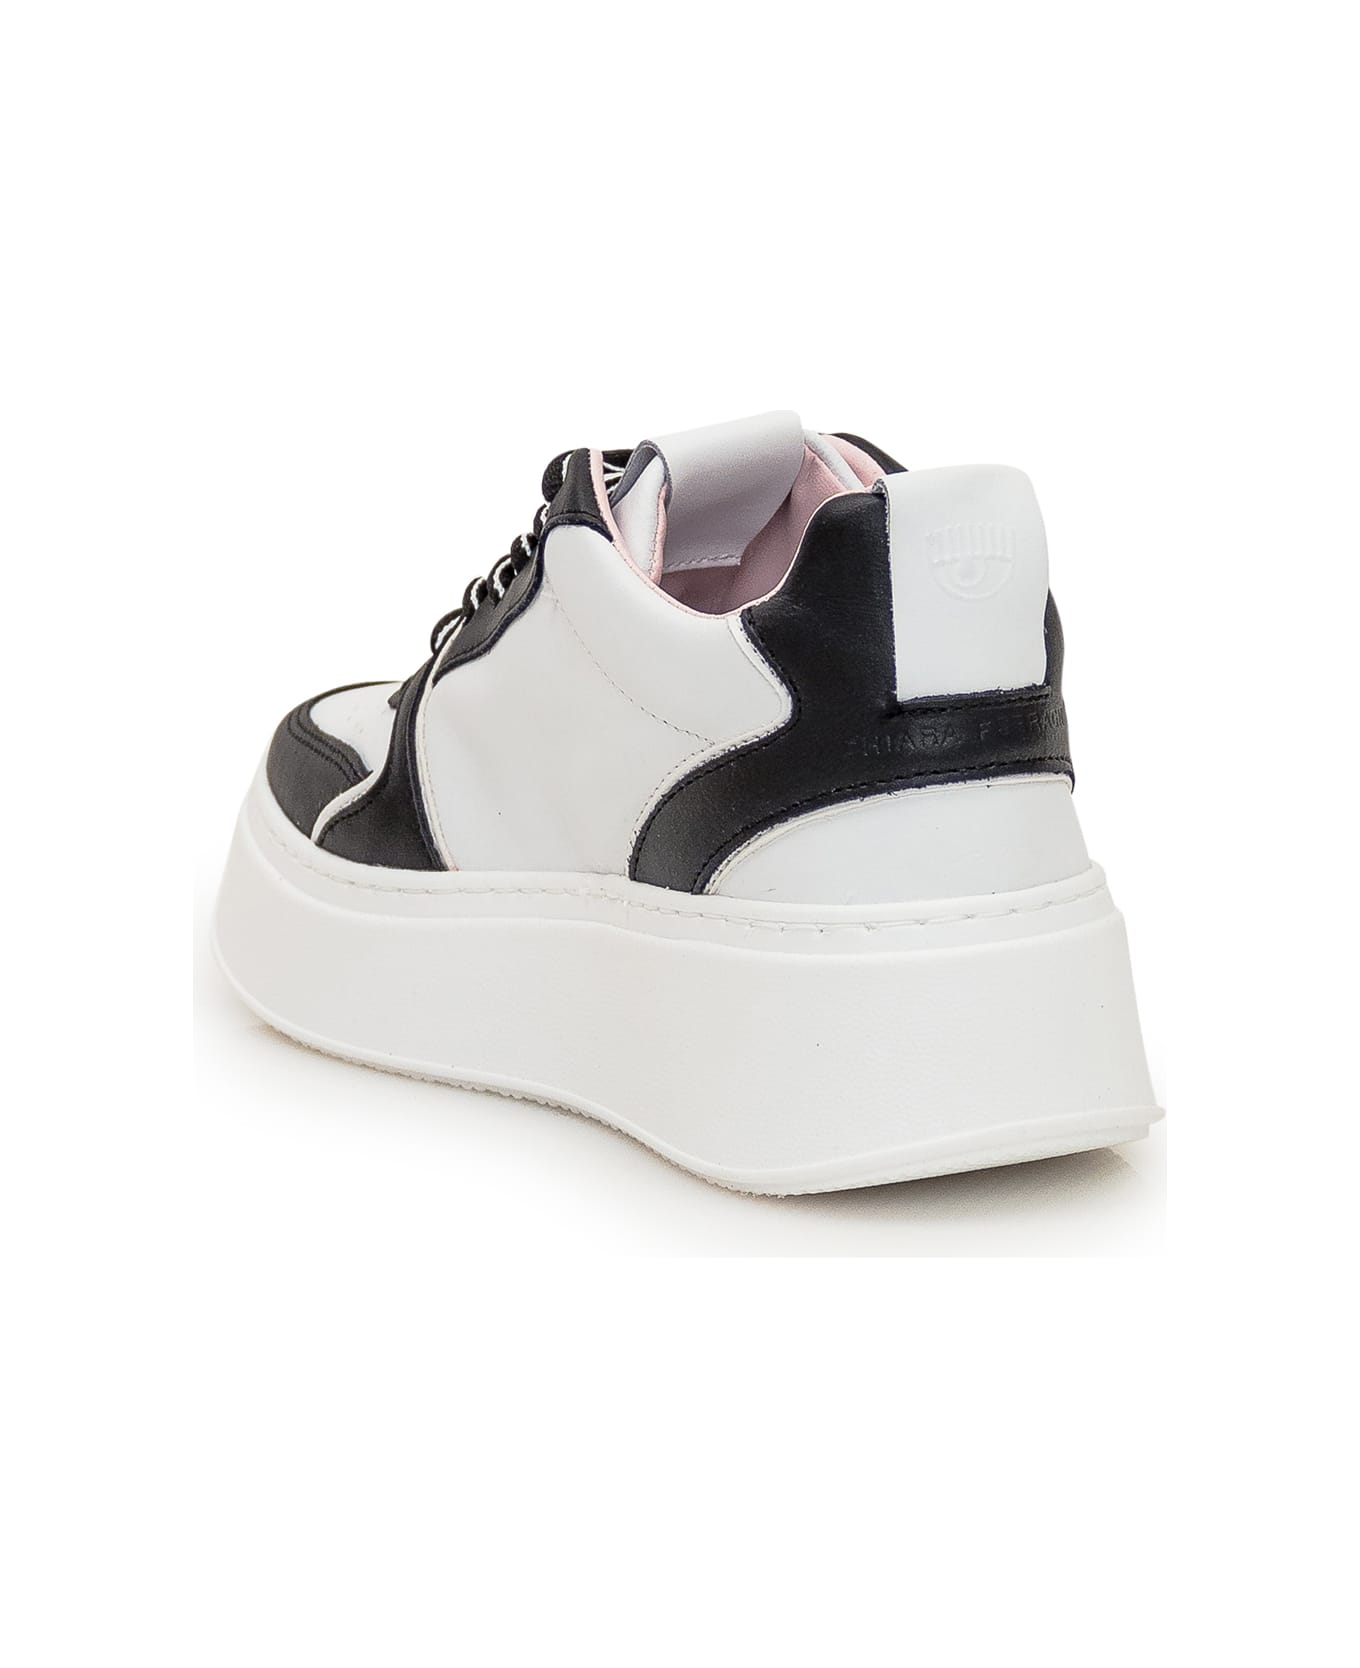 Chiara Ferragni School Sneaker - WHITE-BLACK スニーカー